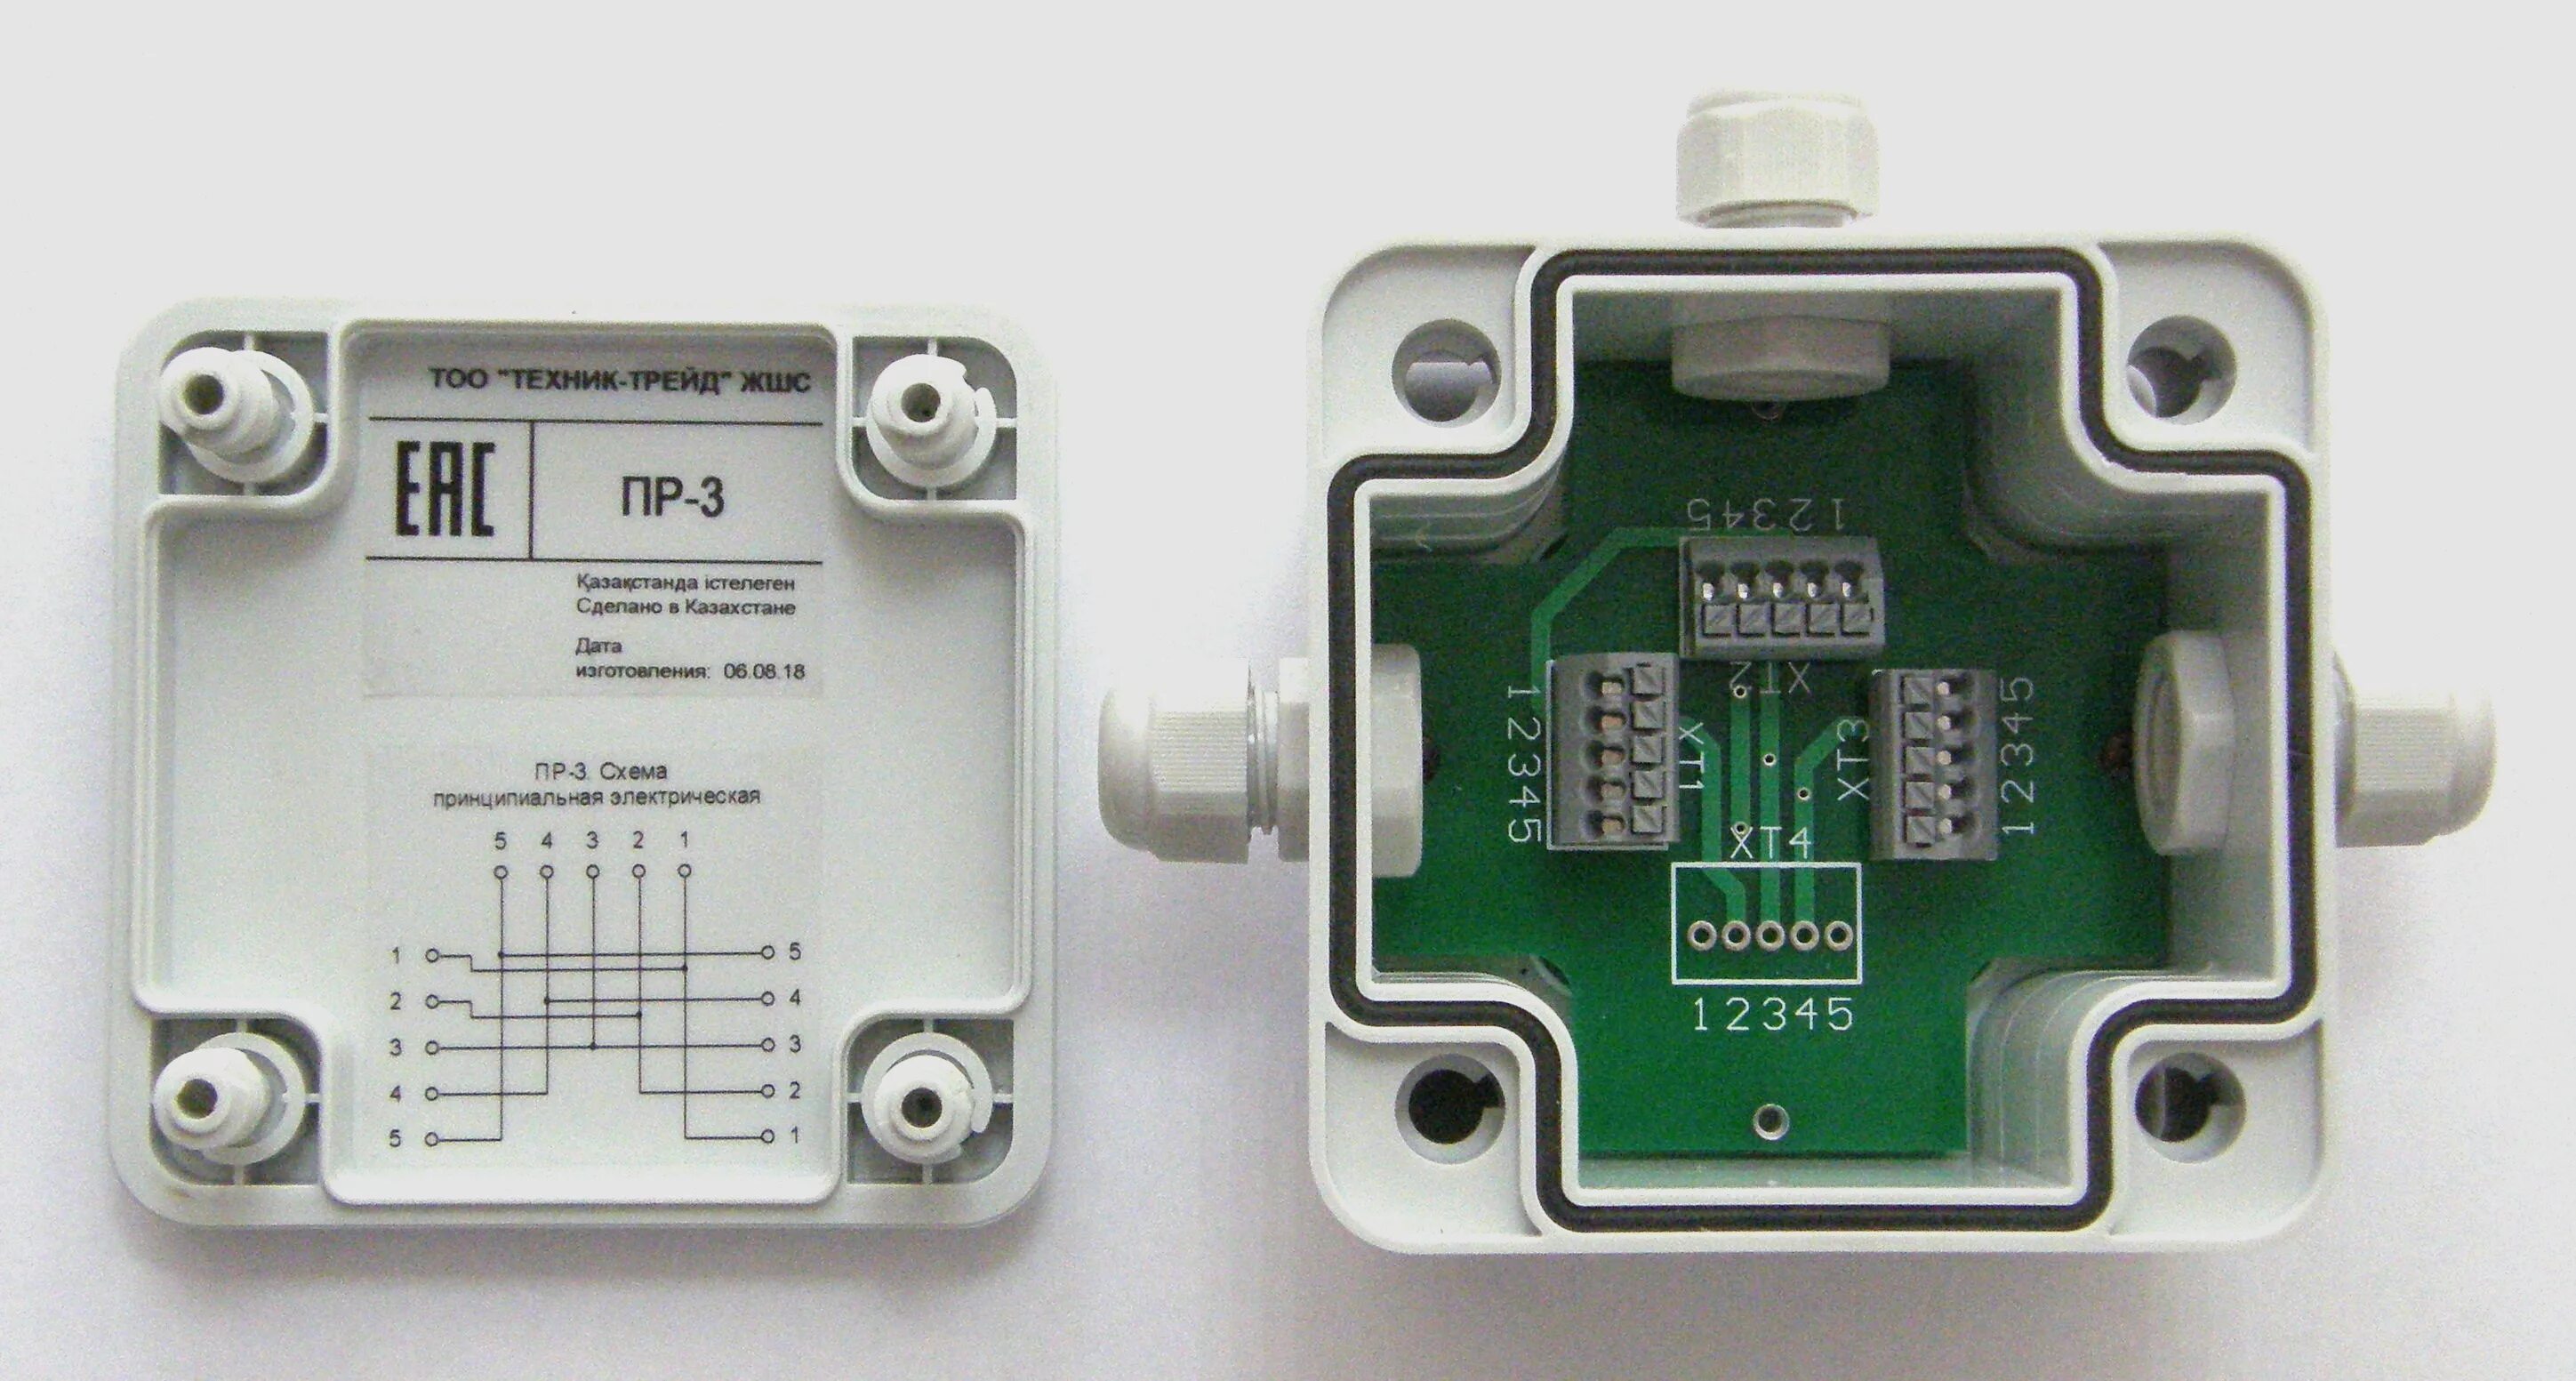 Разветвитель пр 3. Разветвитель интерфейса пр-4 RS-422/485. Разветвитель интерфейса RS-422/485 пр-3. Разветвитель интерфейса RS-485 КРП-3. Разветвитель интерфейса RS-485 пр-4.